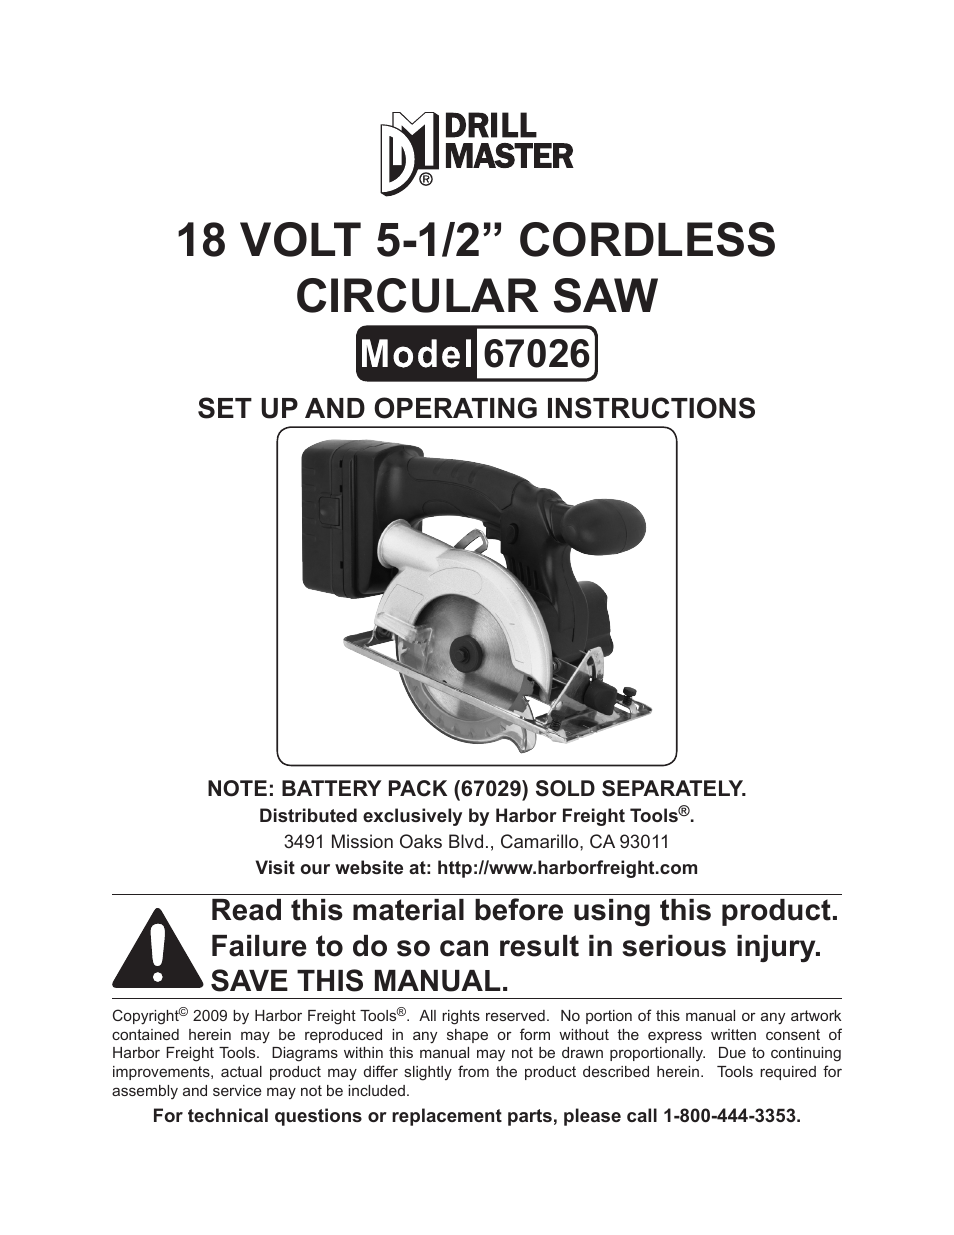 18 Volt 5-1/2 Cordless Circular Saw 67026